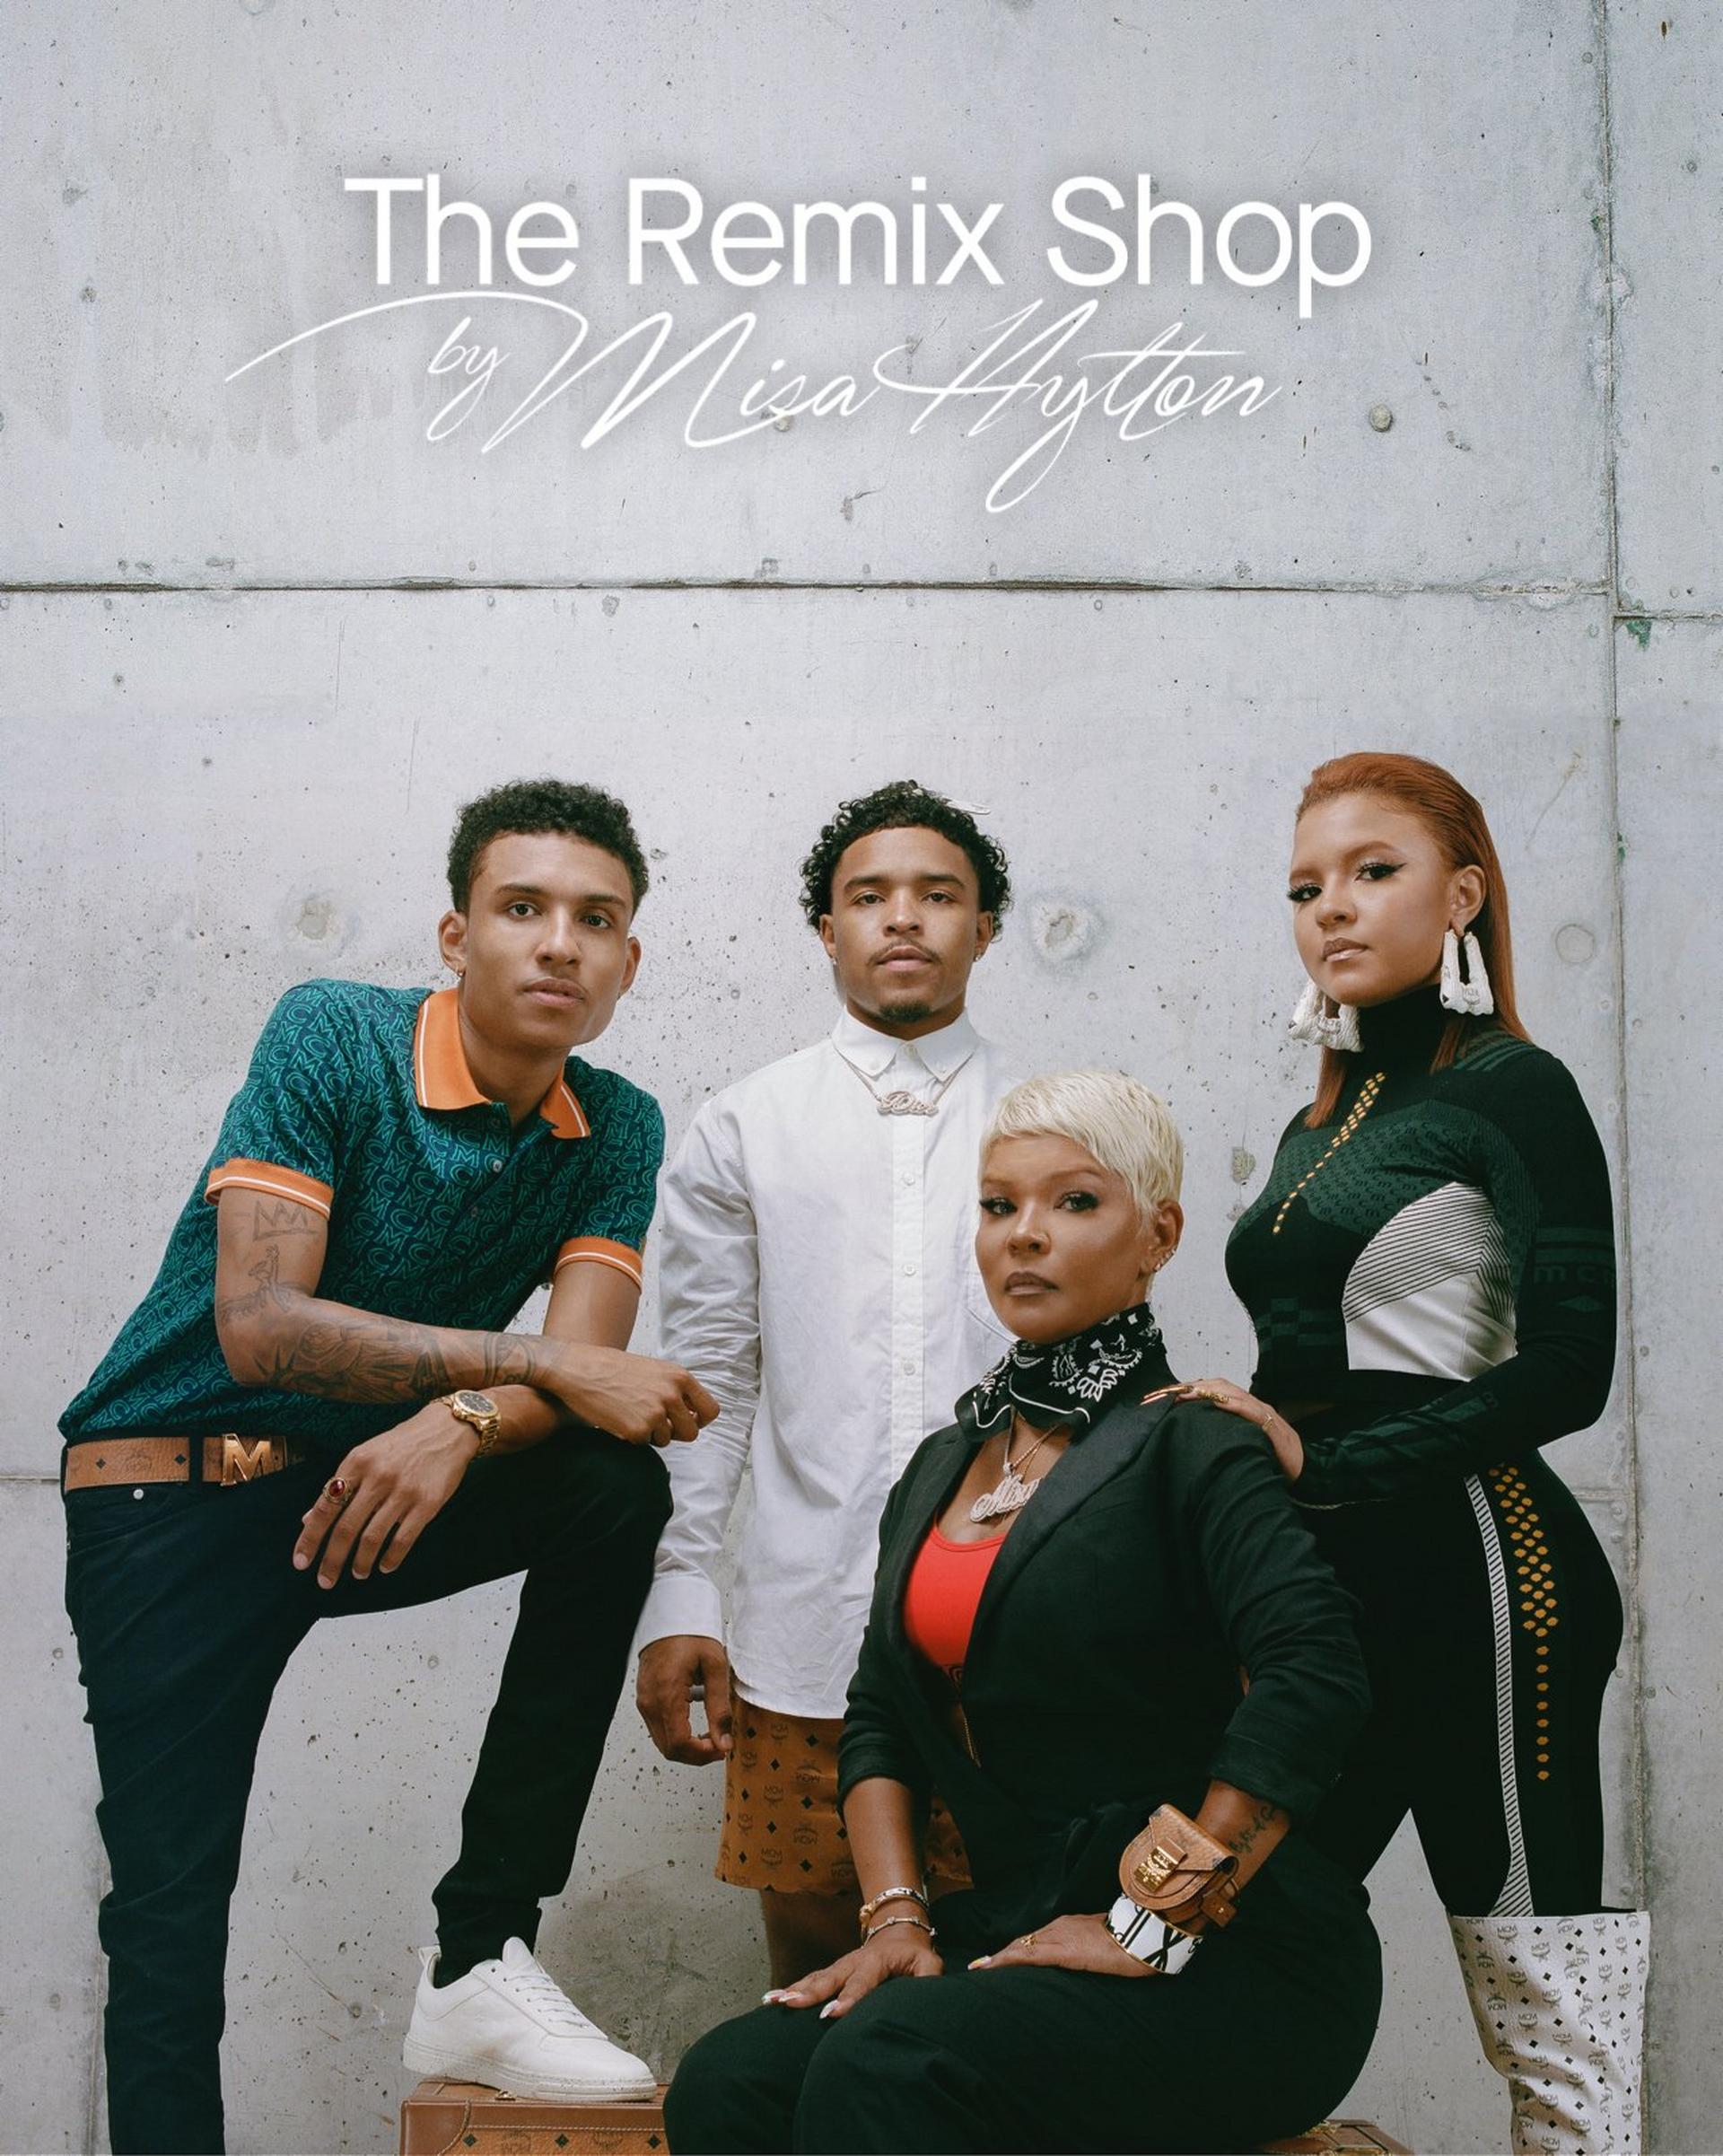 The Remix Shop by Misa Hylton